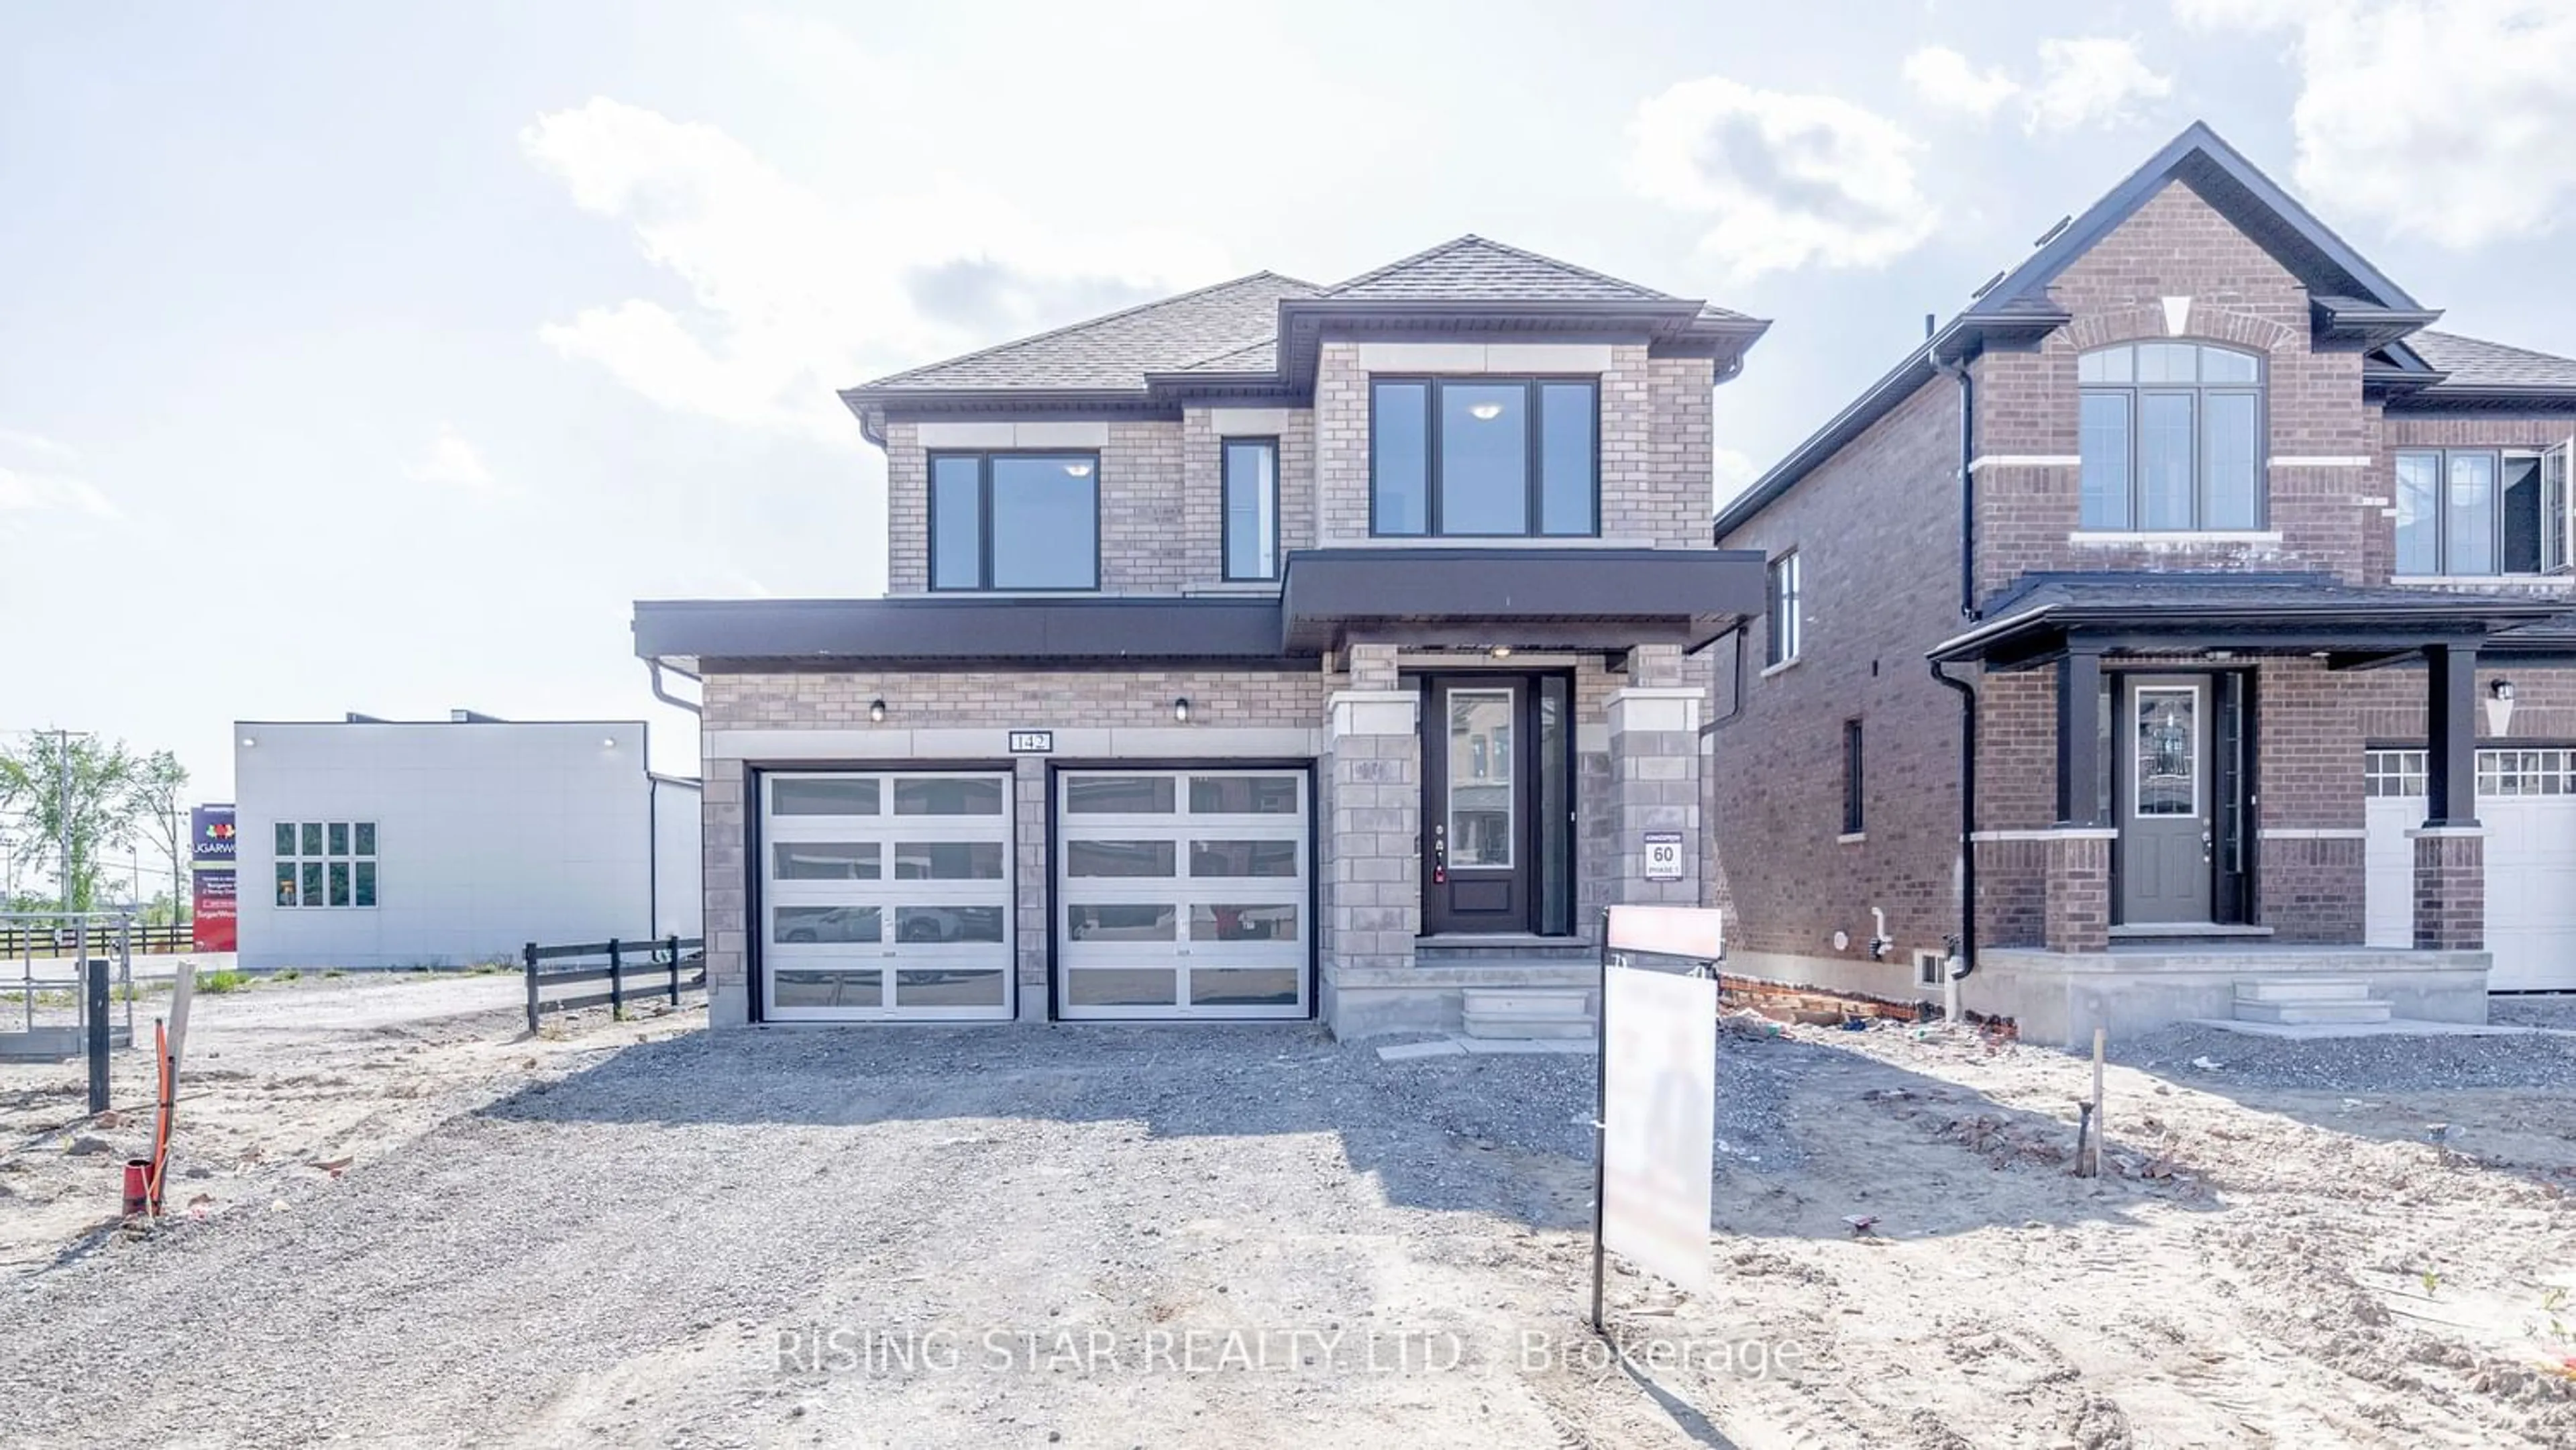 Home with brick exterior material for 142 ST JOSEPH Rd, Kawartha Lakes Ontario K9V 0R6